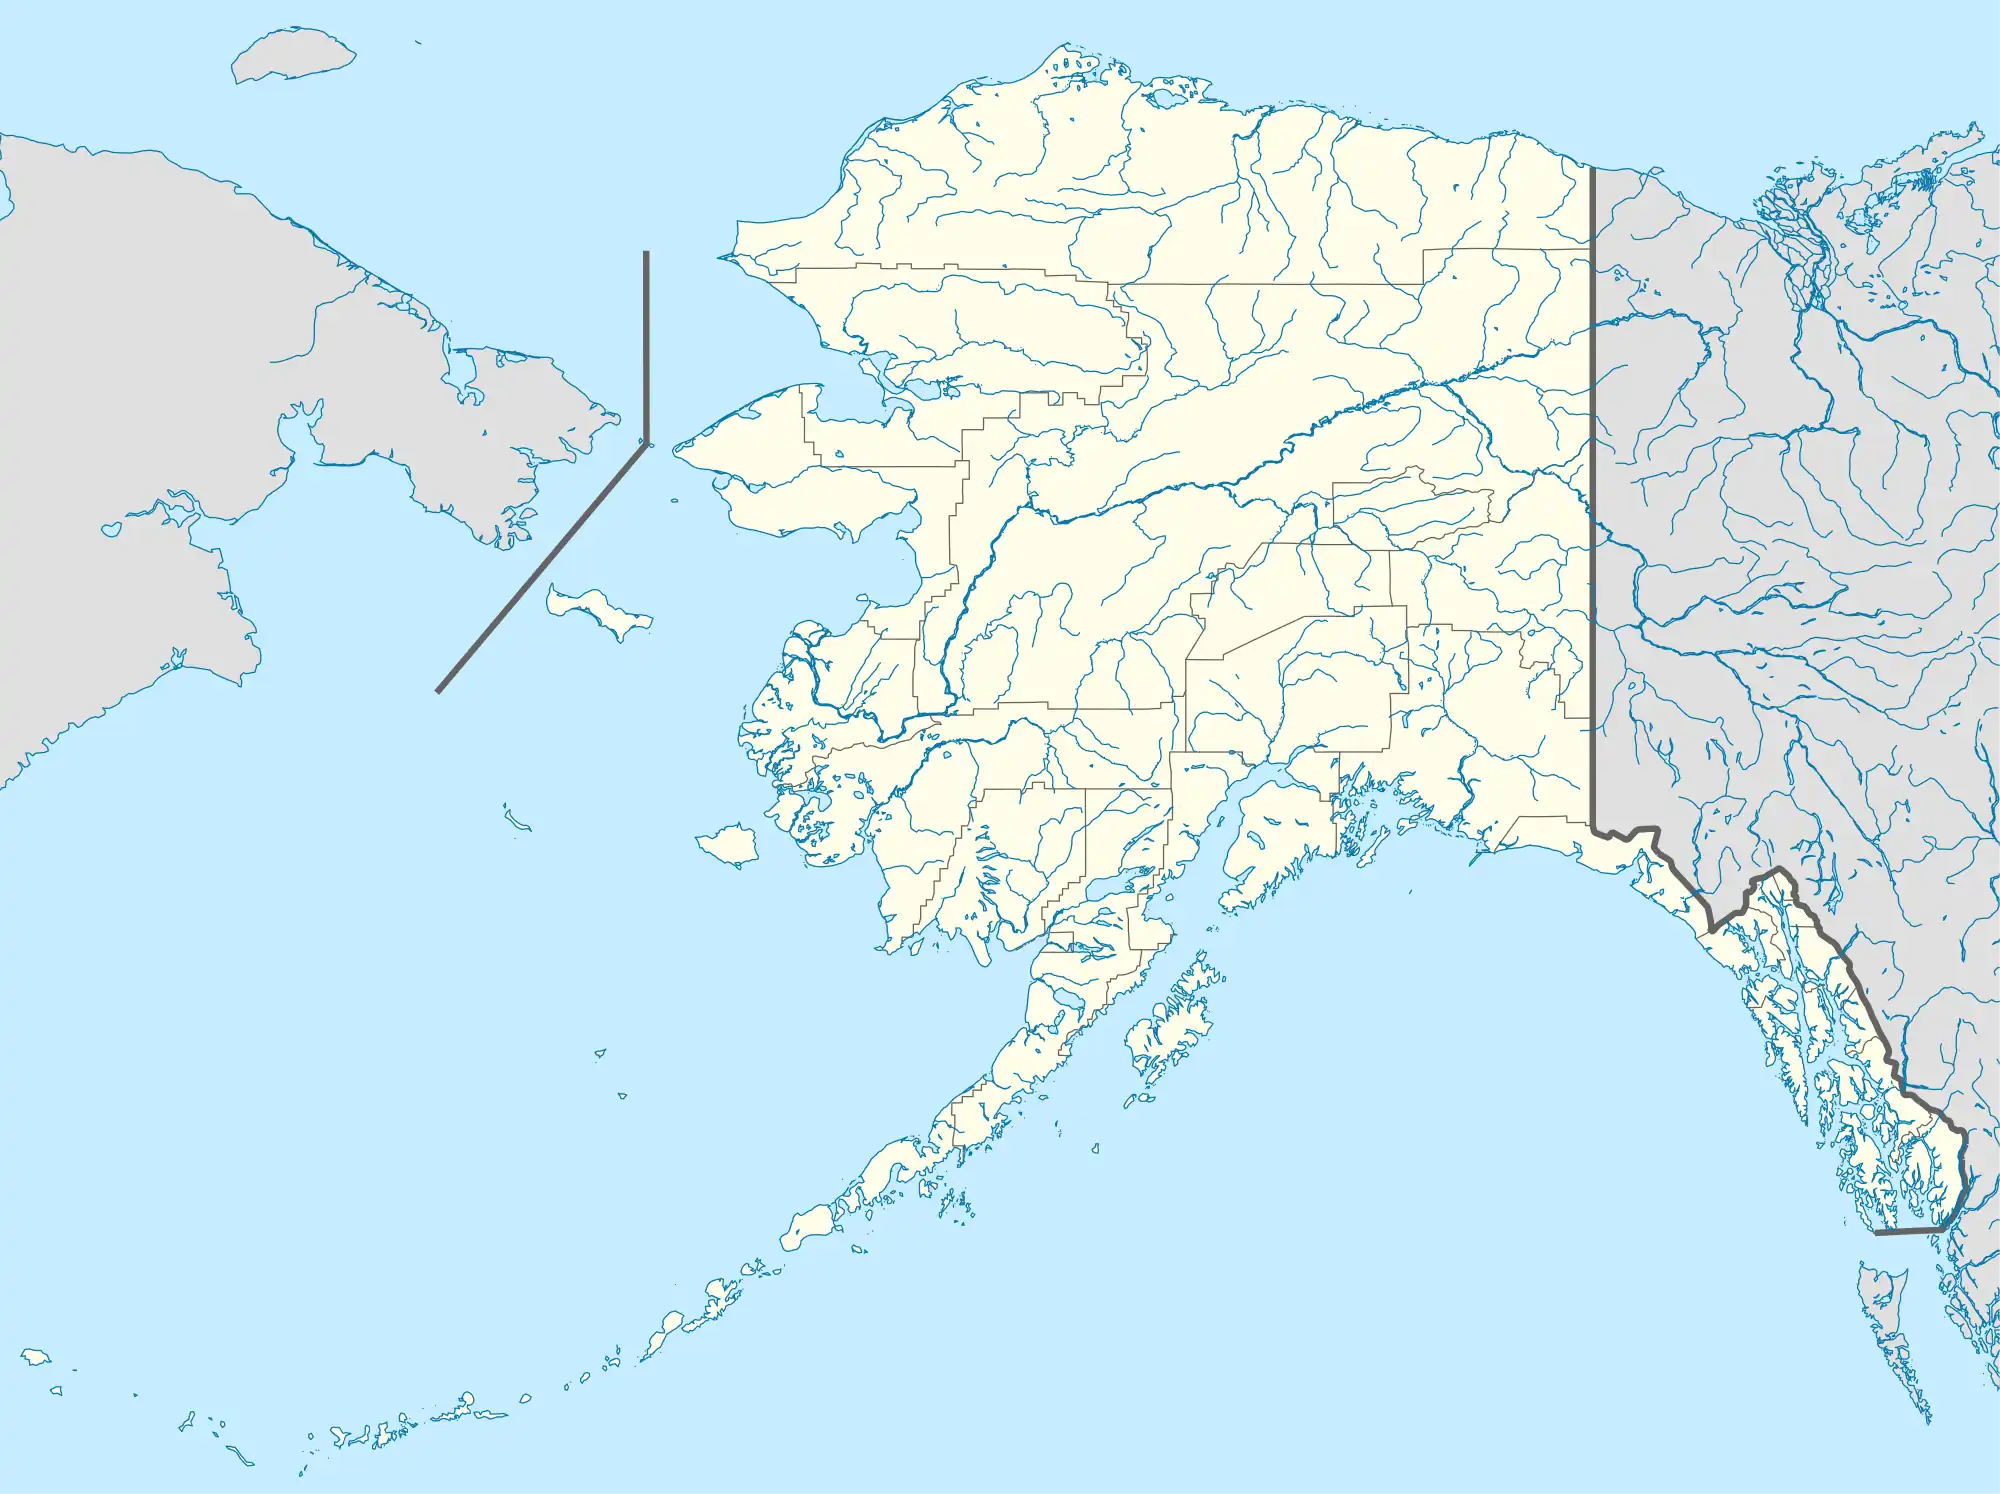 Teller is located in Alaska